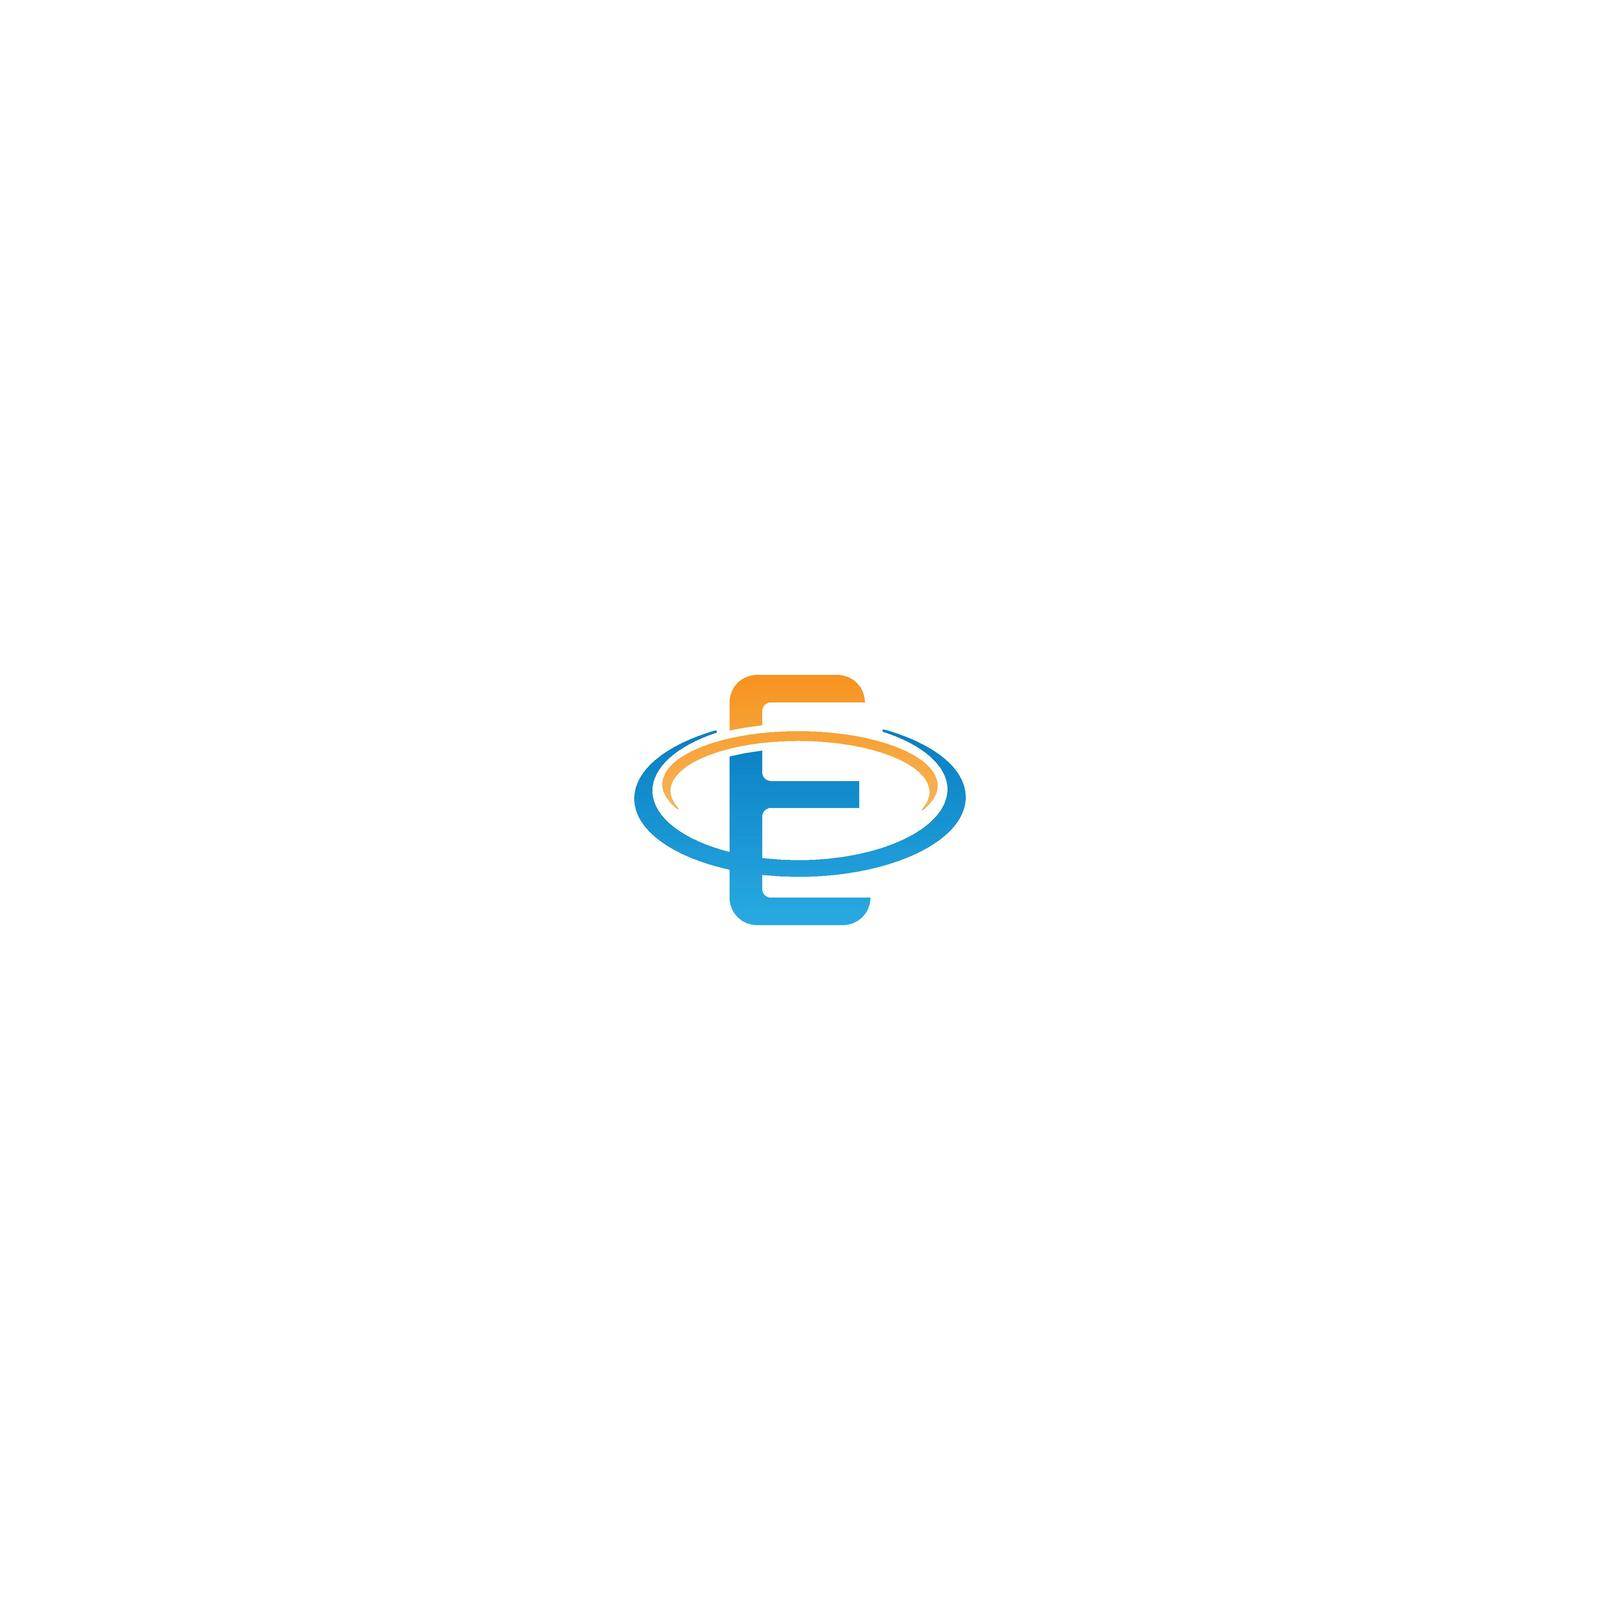 E Letter circle Logo, Concept Letter E + icon circle